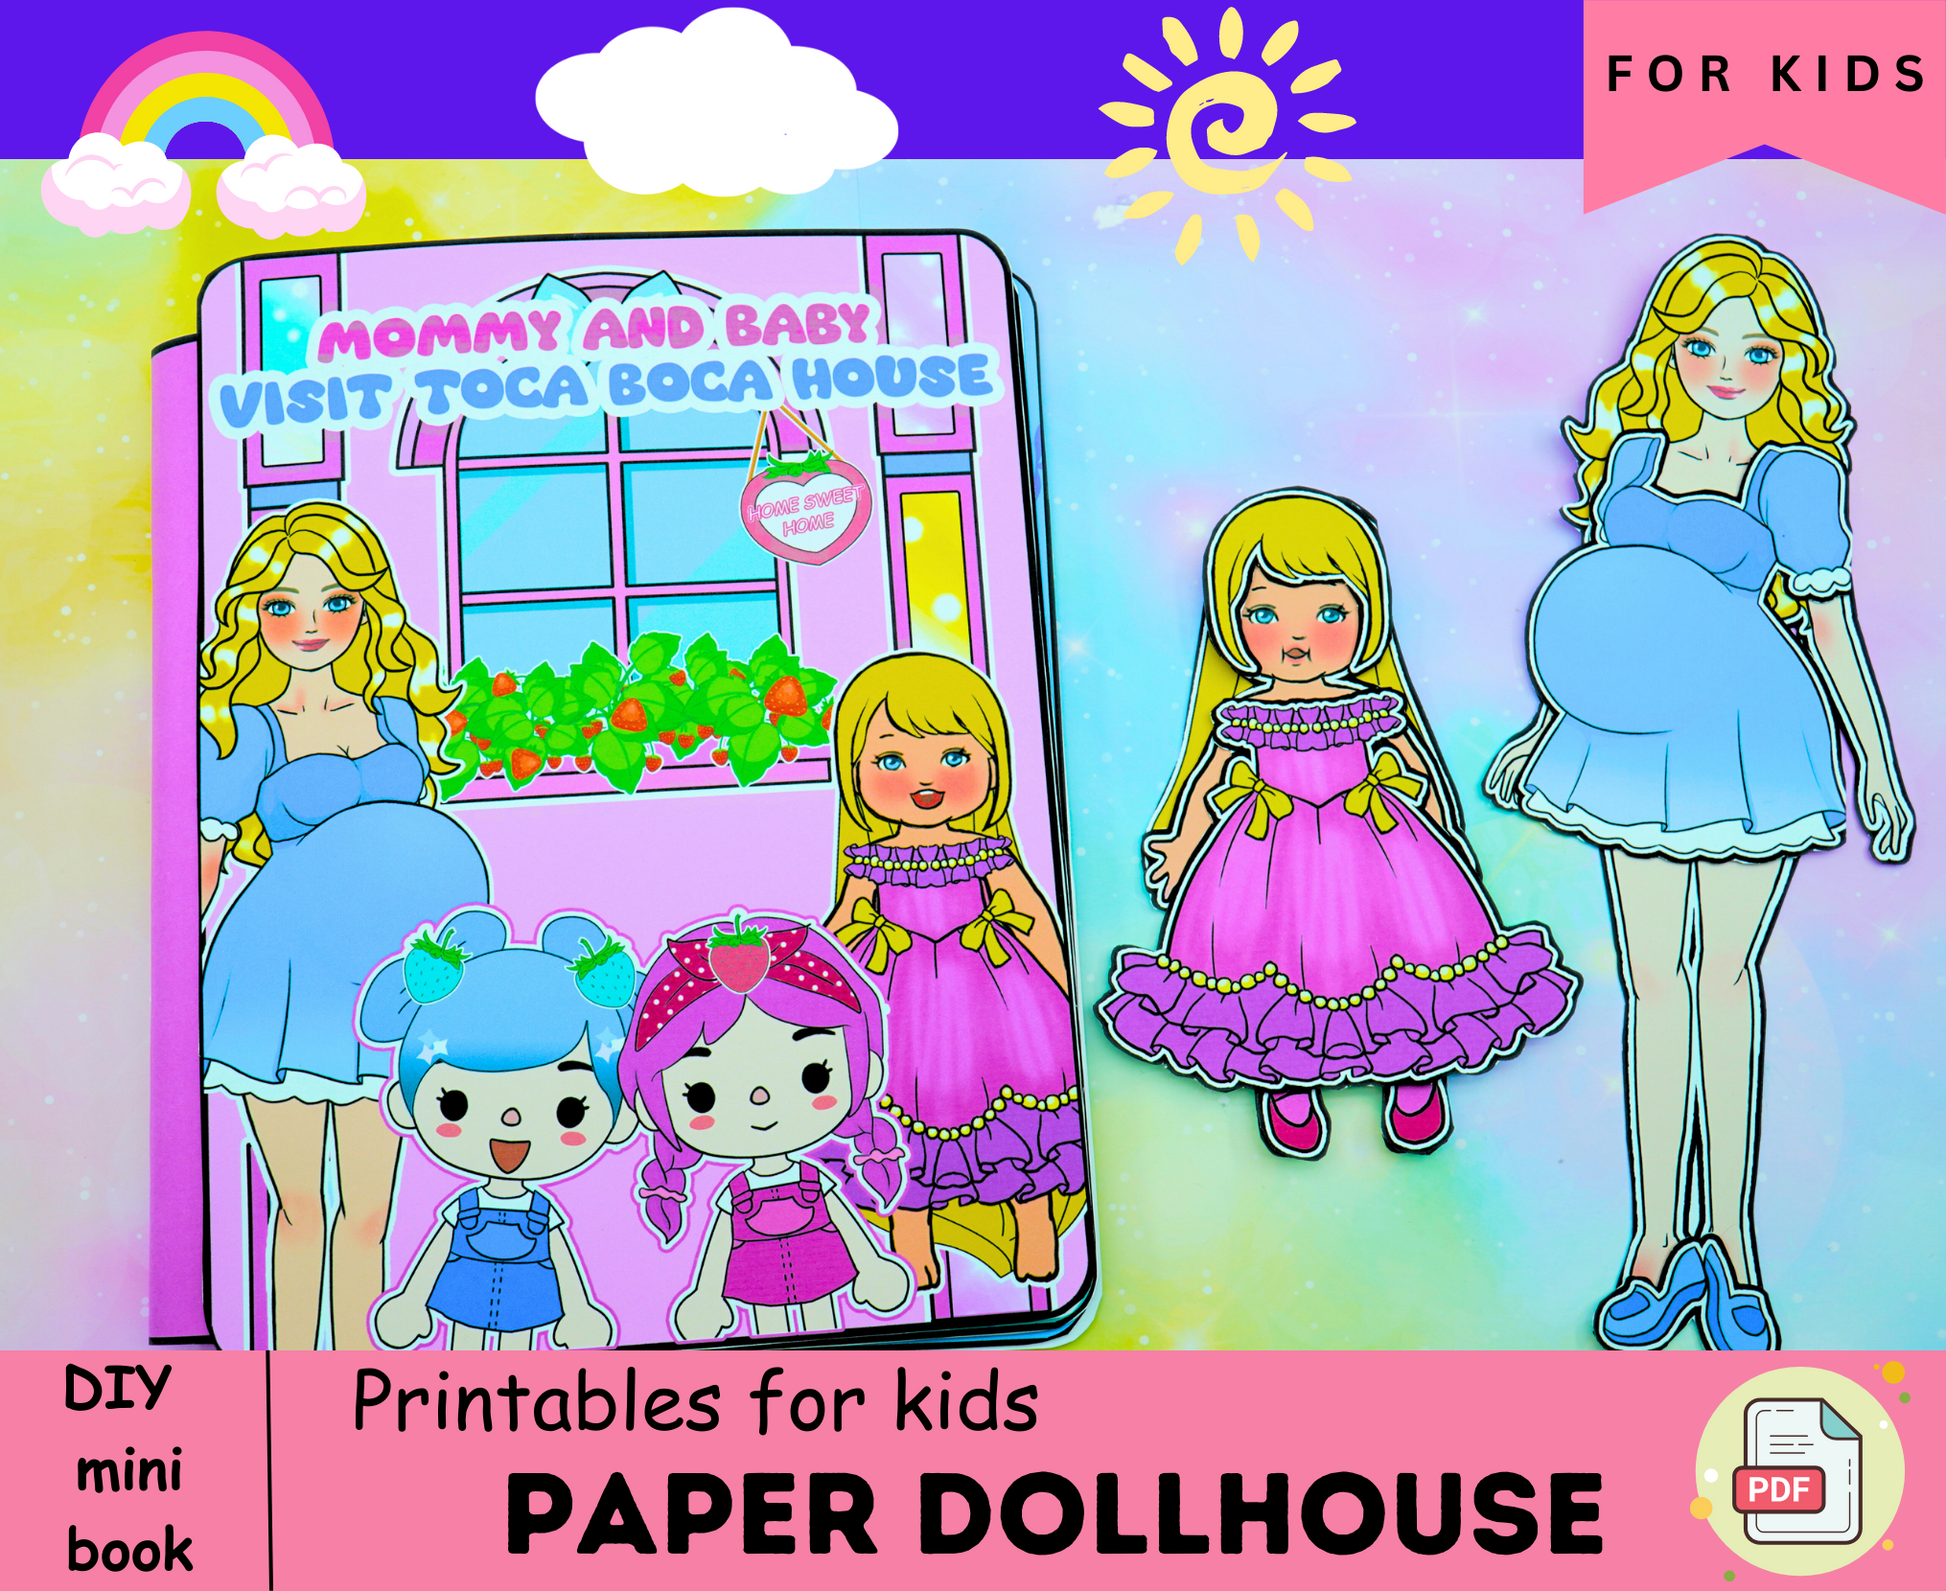 TOCA BOCA Paper Doll making kit DIY/Handmade Paper Crafts Idea